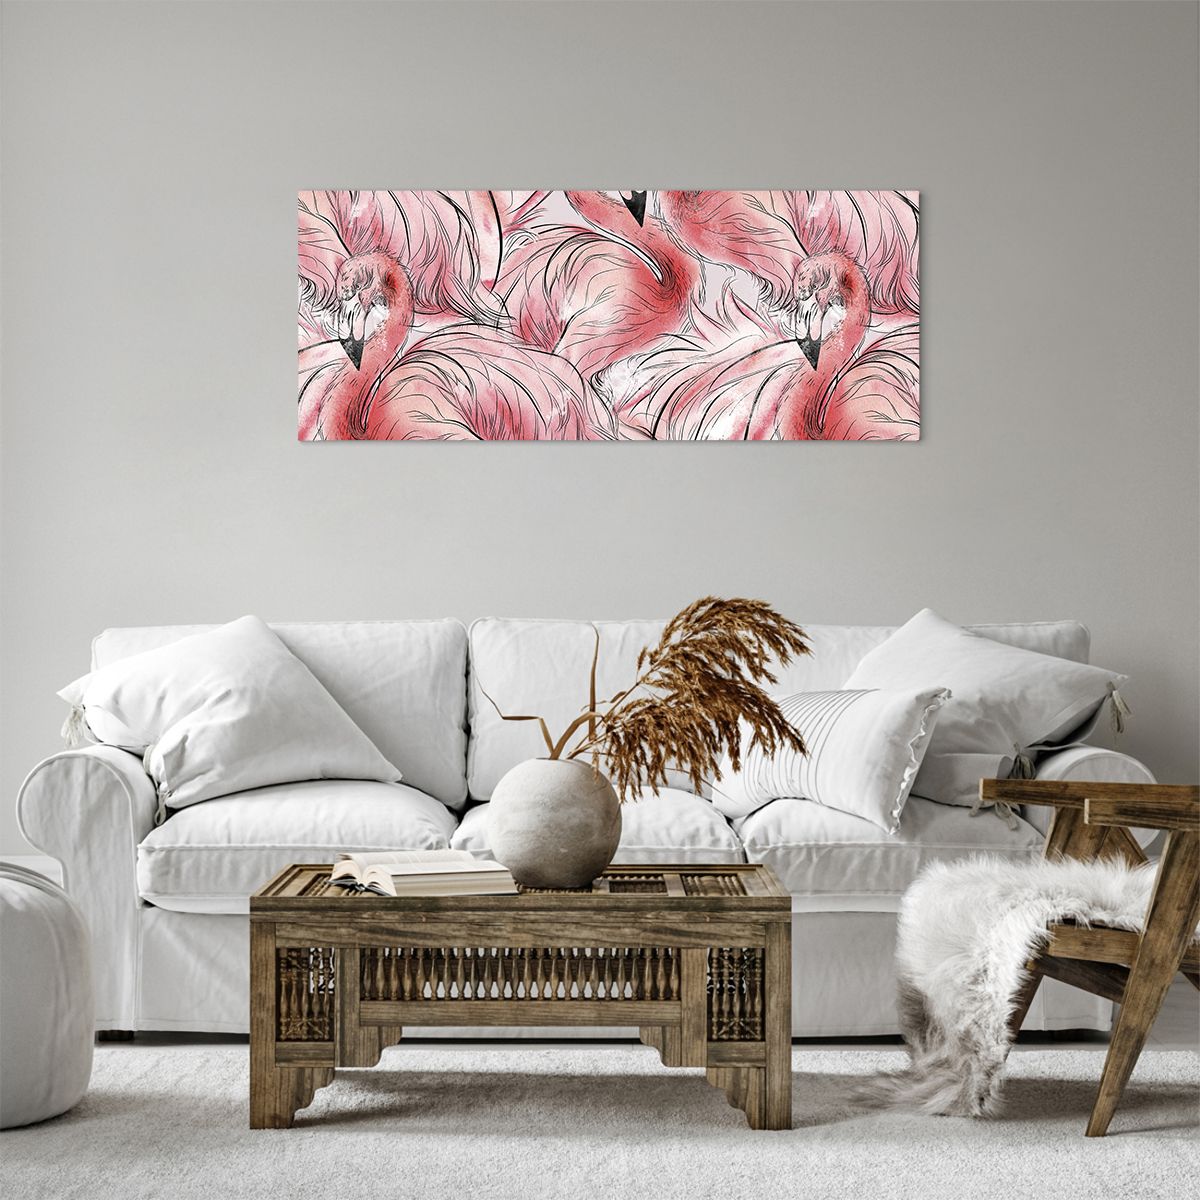 Bild auf Leinwand Flamingo, Bild auf Leinwand Vogel, Bild auf Leinwand Grafik, Bild auf Leinwand Zeichnung, Bild auf Leinwand Pastellfarben